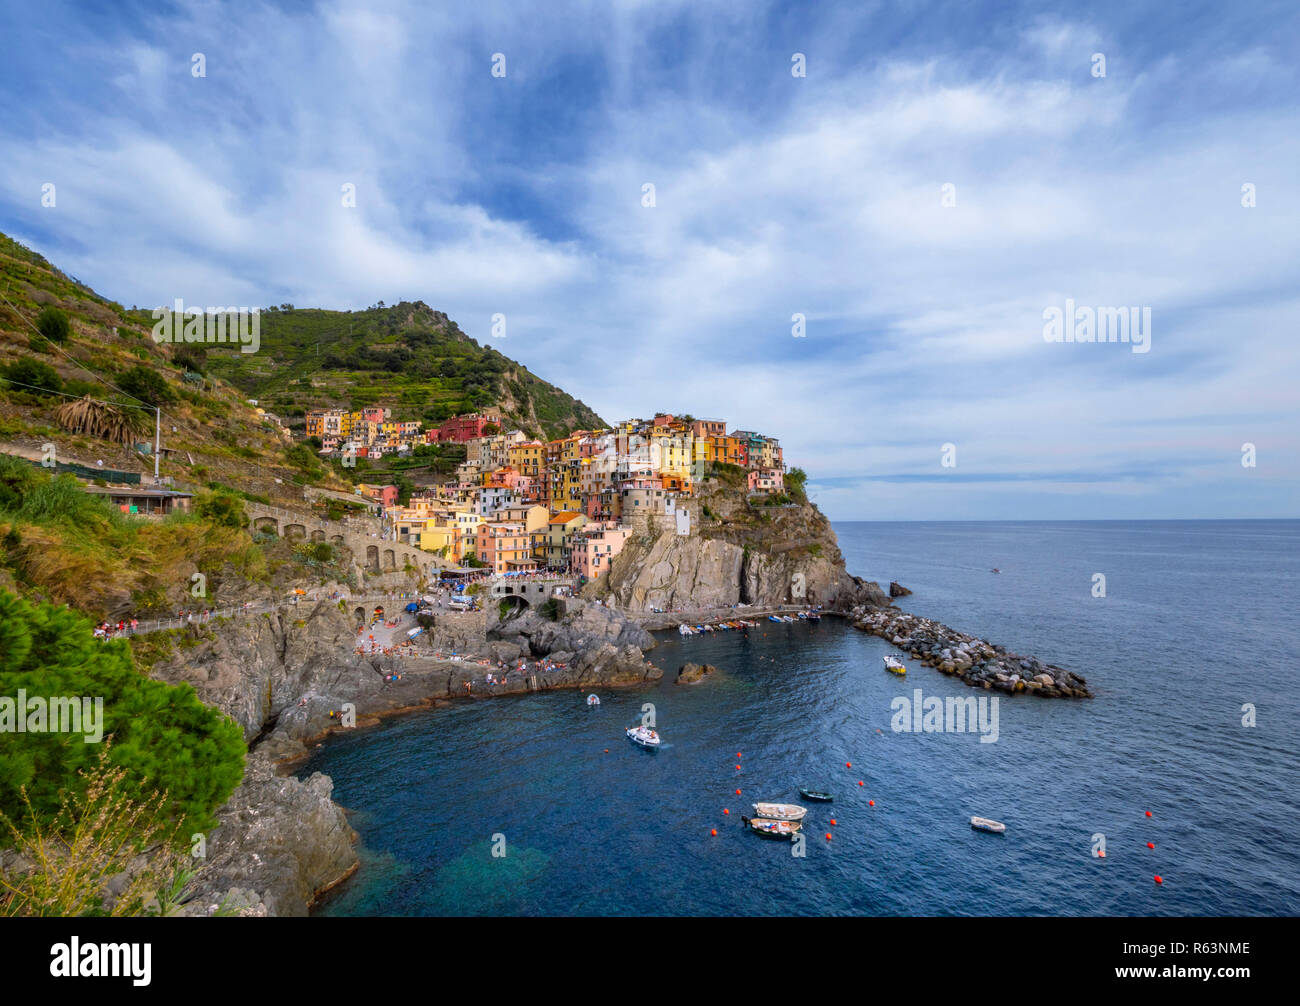 Town view with harbor and colorful houses, Manarola, Cinque Terre, La Spezia, Liguria, Italy, Europe Stock Photo